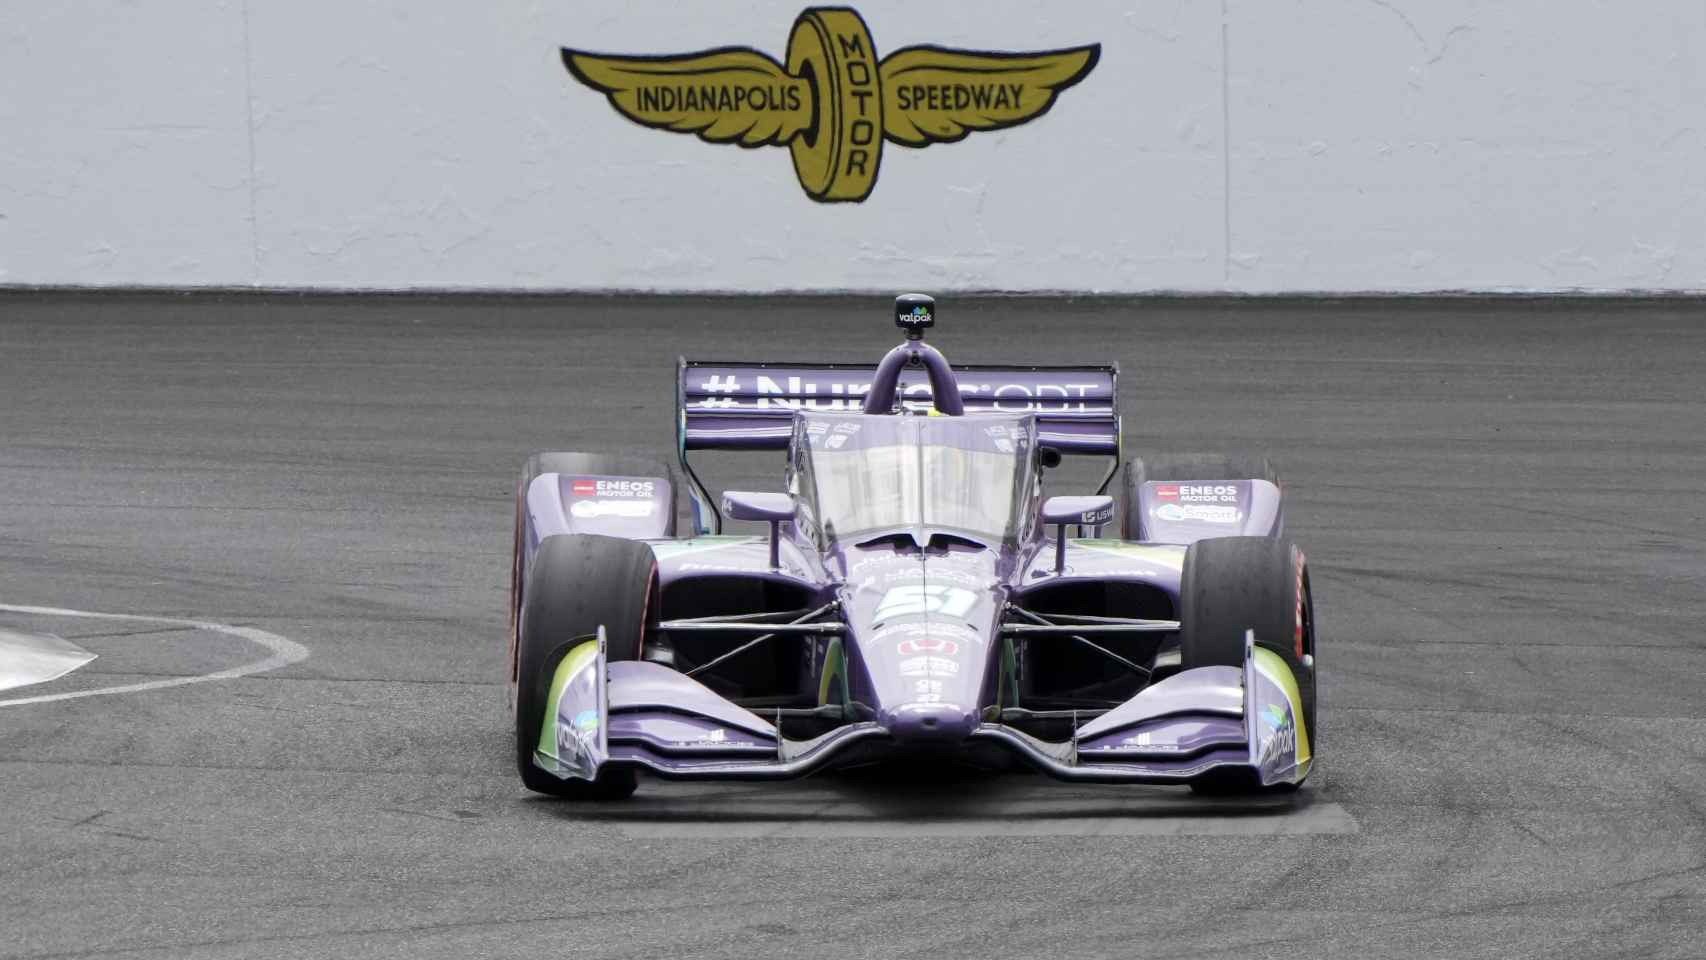 Grosjean pilotando su Dale Coyne Racing en el GP de Indianápolis 2021